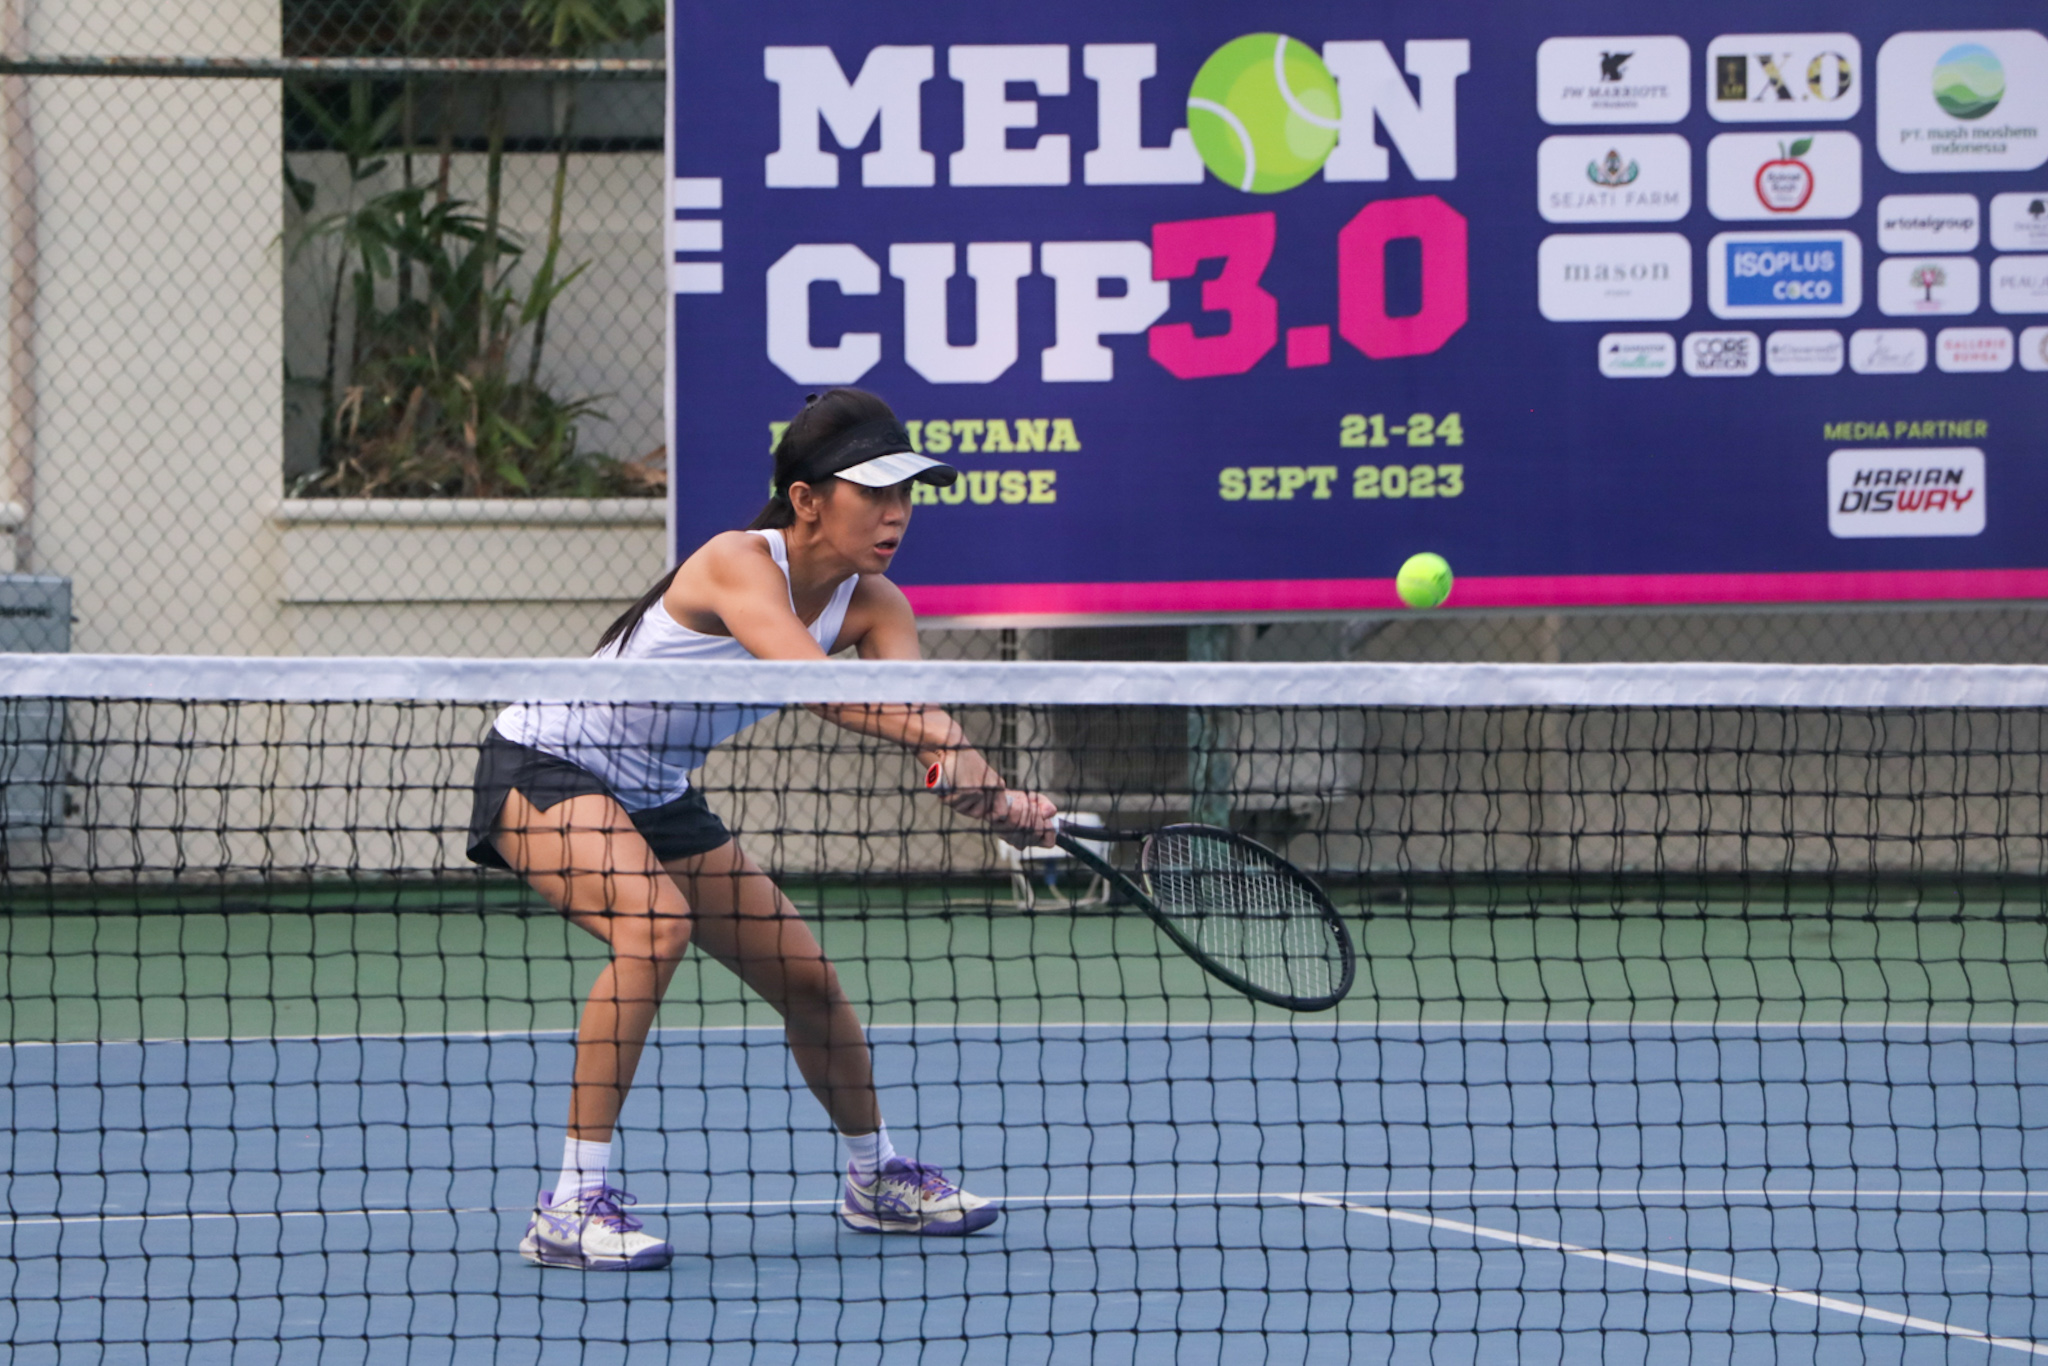 Women Empowerment di Tenis Melon Cup 2023 Surabaya